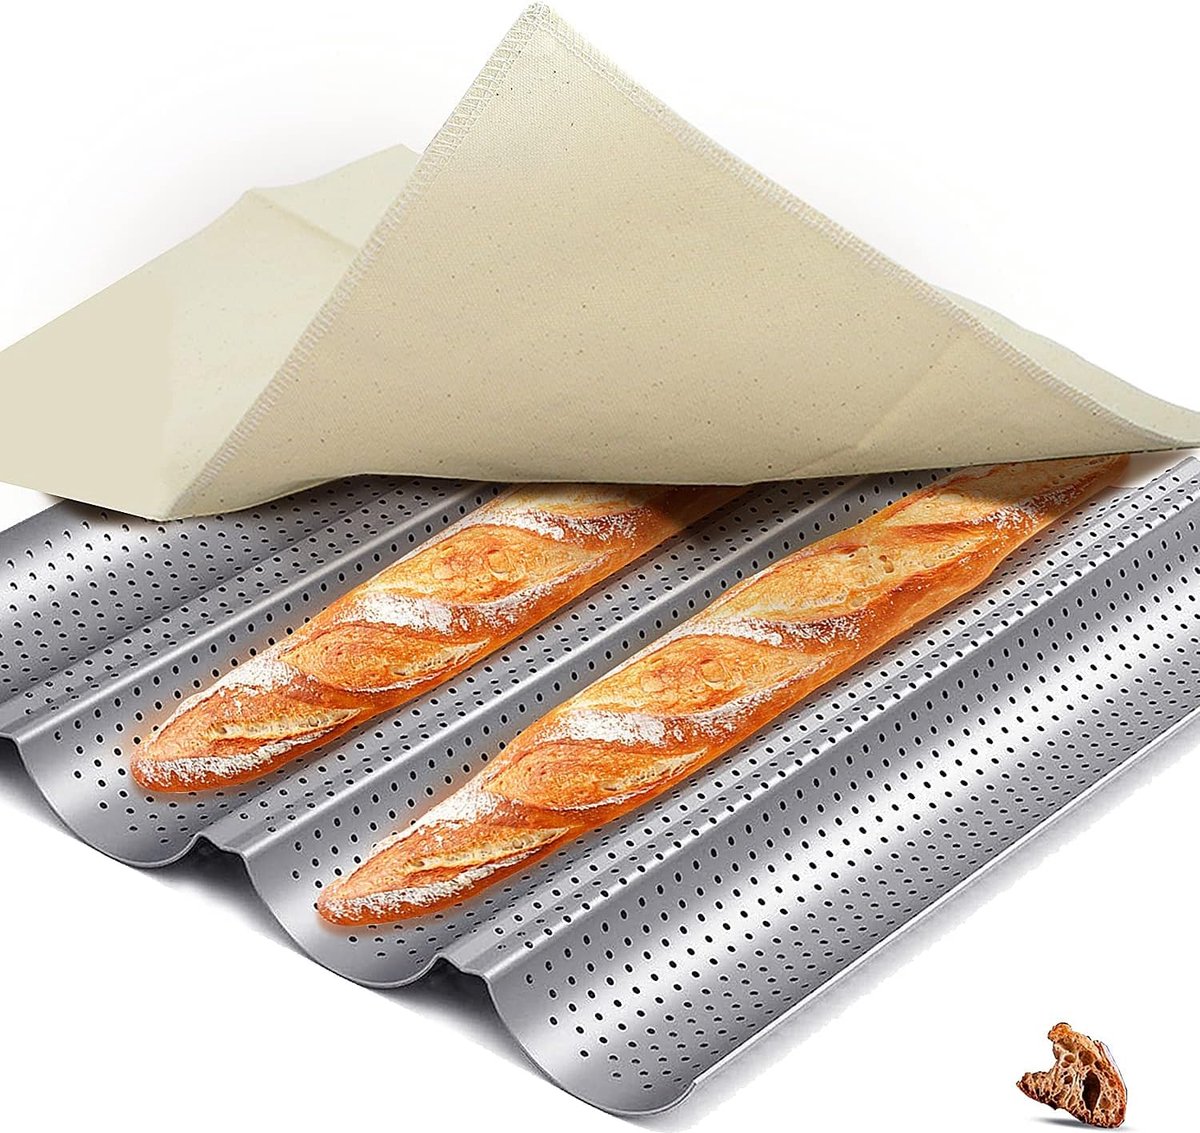 Bakvorm met antiaanbaklaag, geperforeerd Franse baguettebrood-pan met beschermende doek, 33 x 33 cm bakplaat, 4 Wave Loaves brood-bakvorm toast geperforeerd bakkersvormen